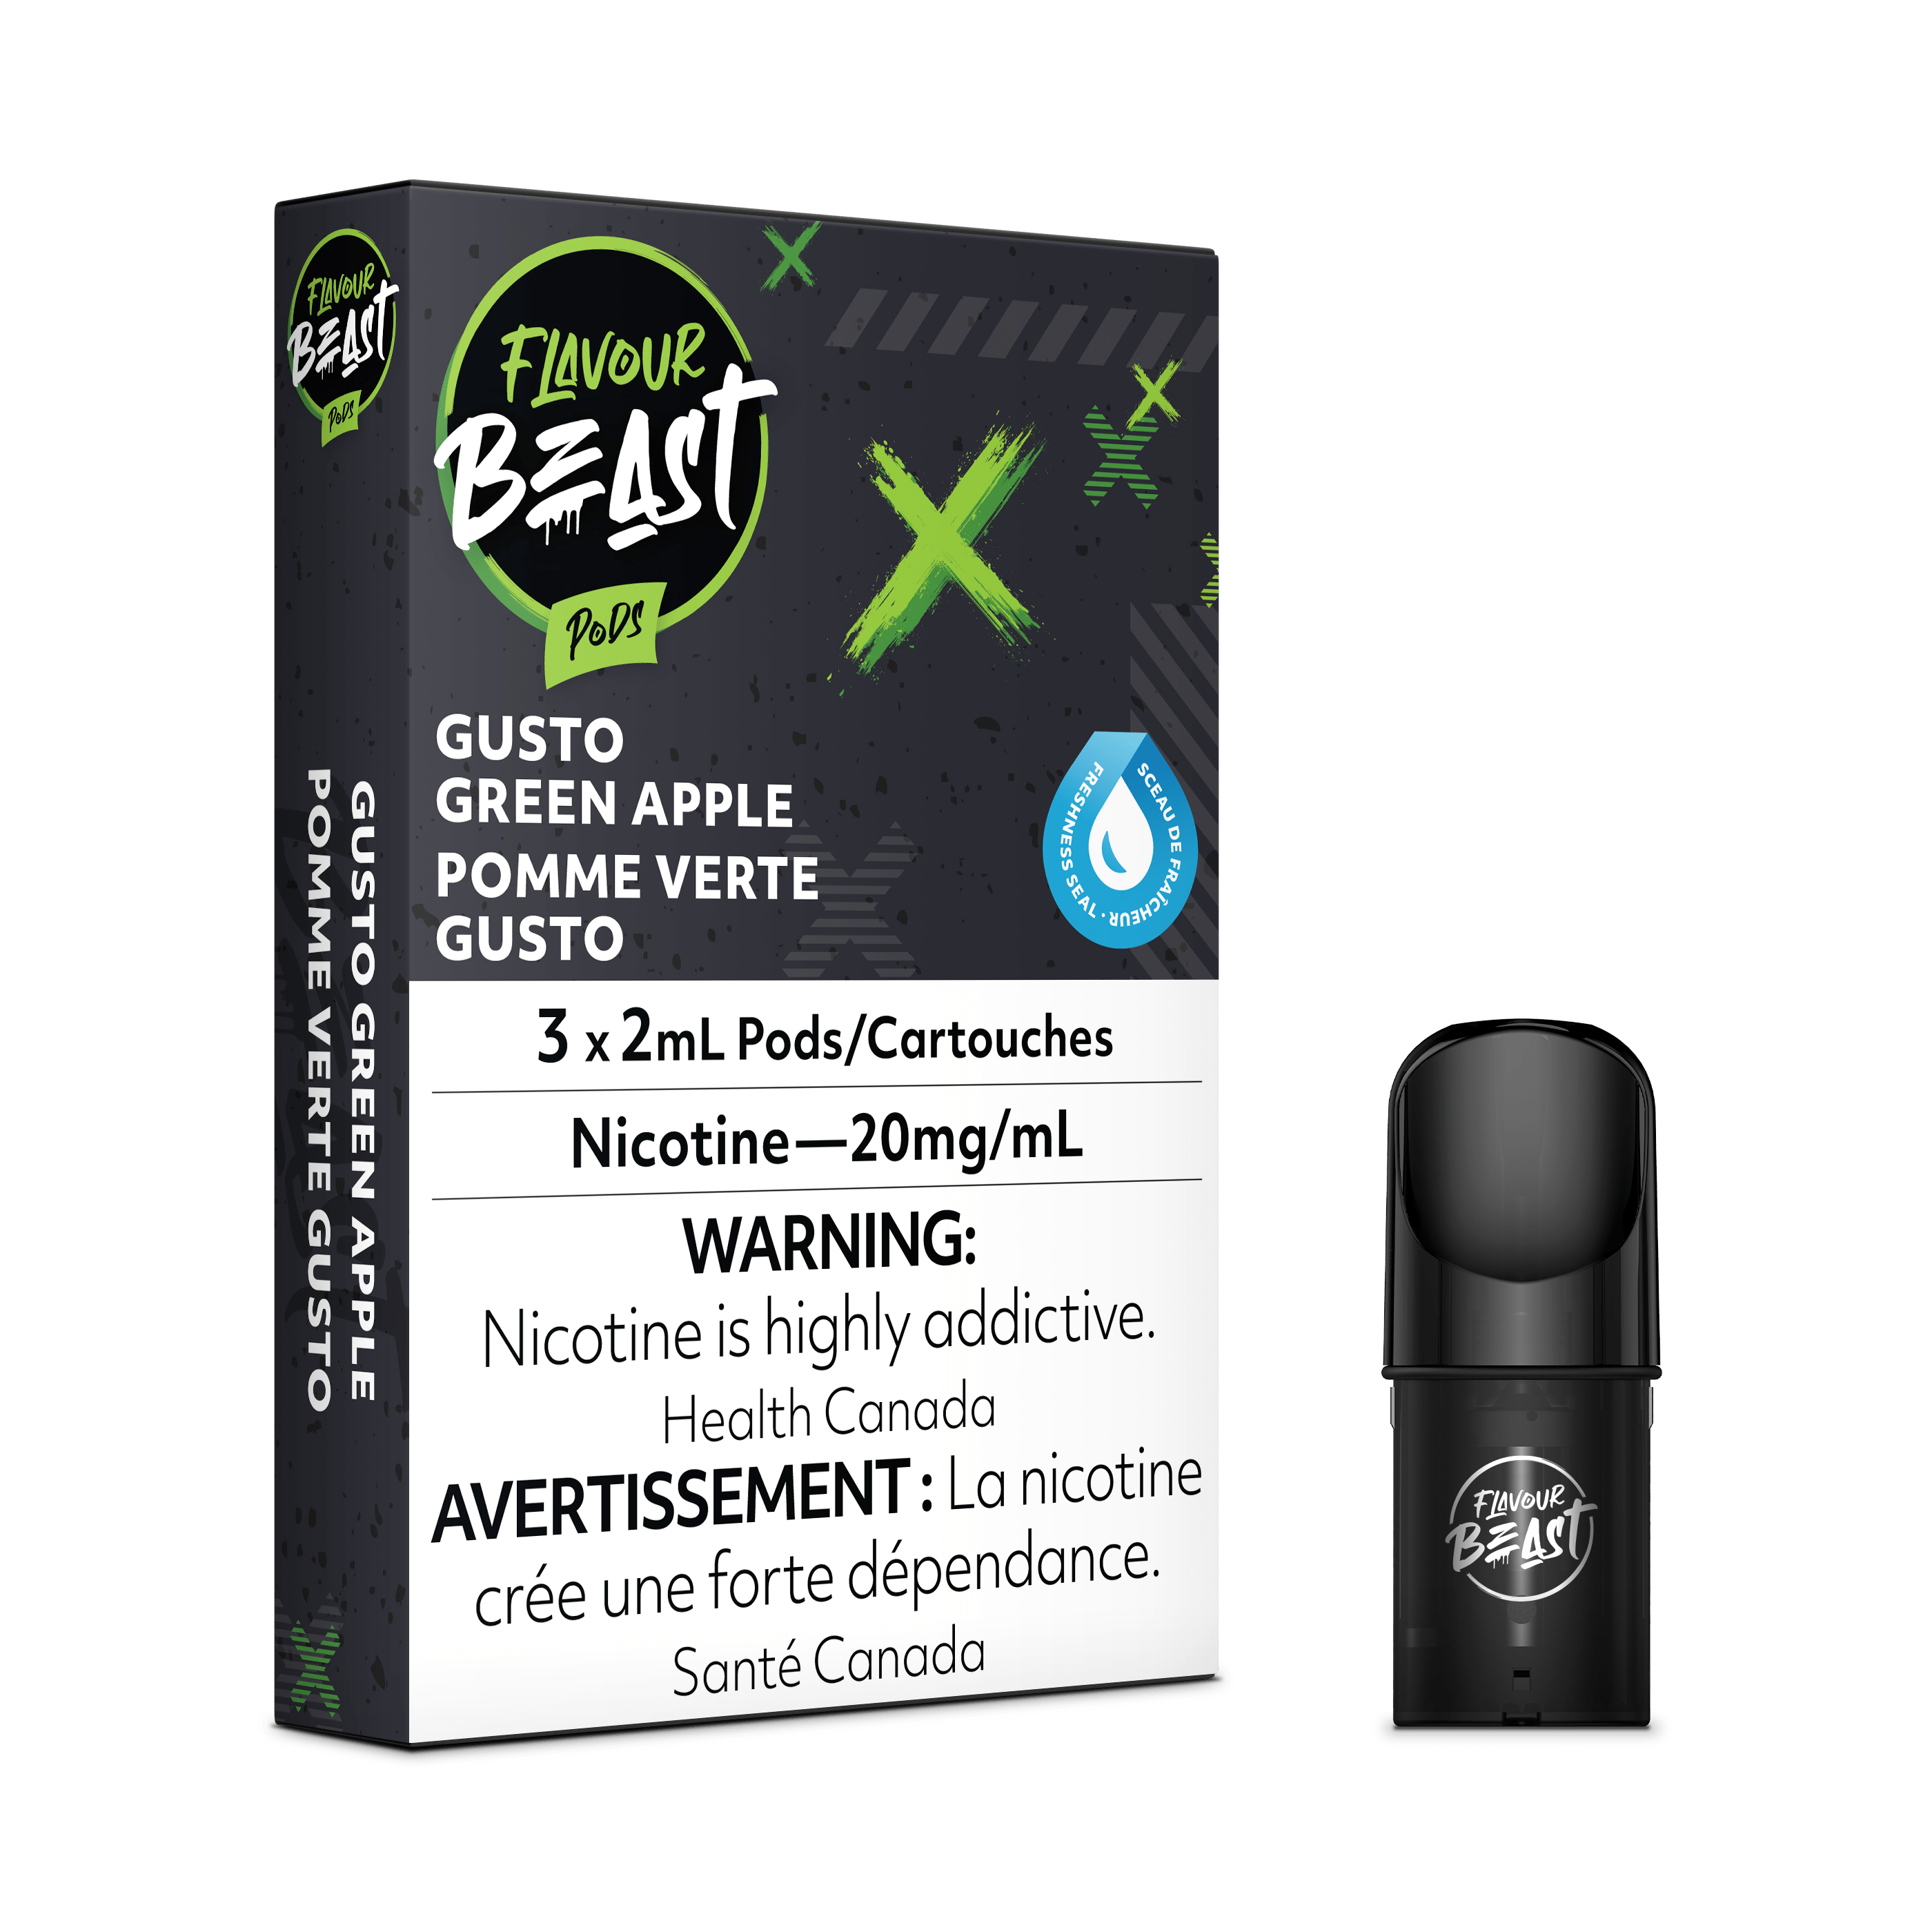 Flavour Beast Vape Pod - Gusto Green Apple available on Canada online vape shop